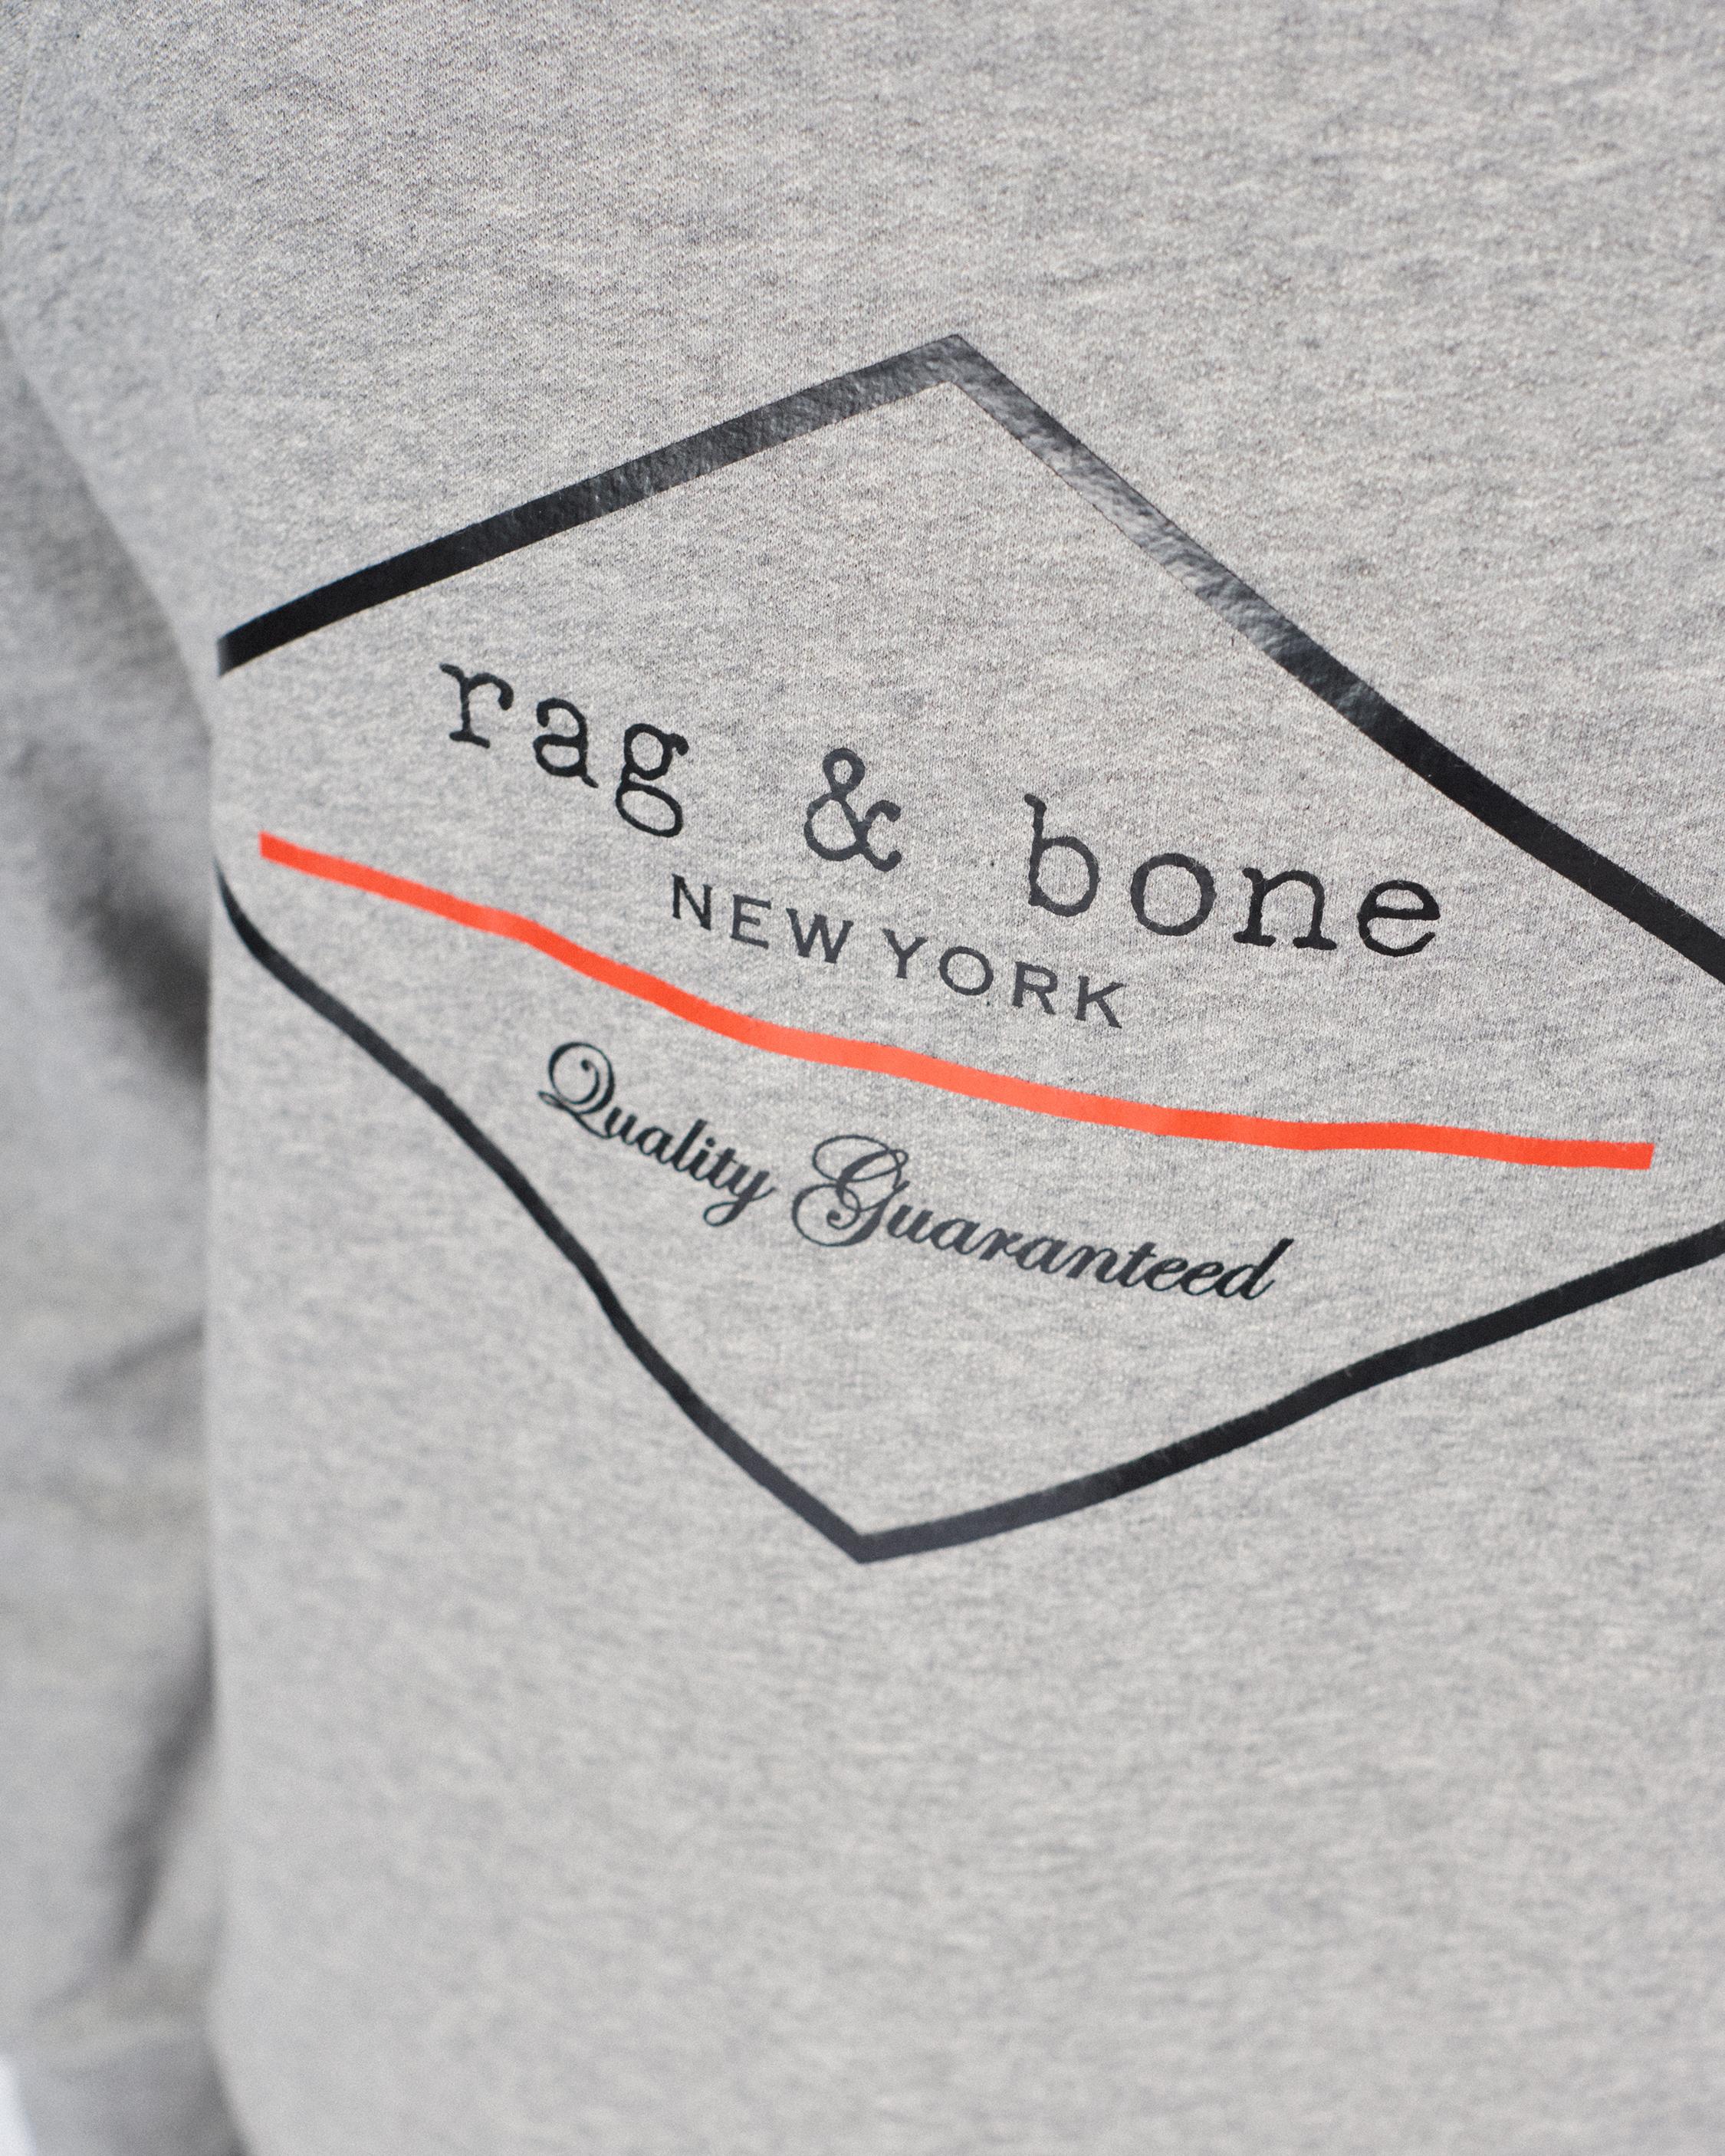 rag and bone quality guaranteed